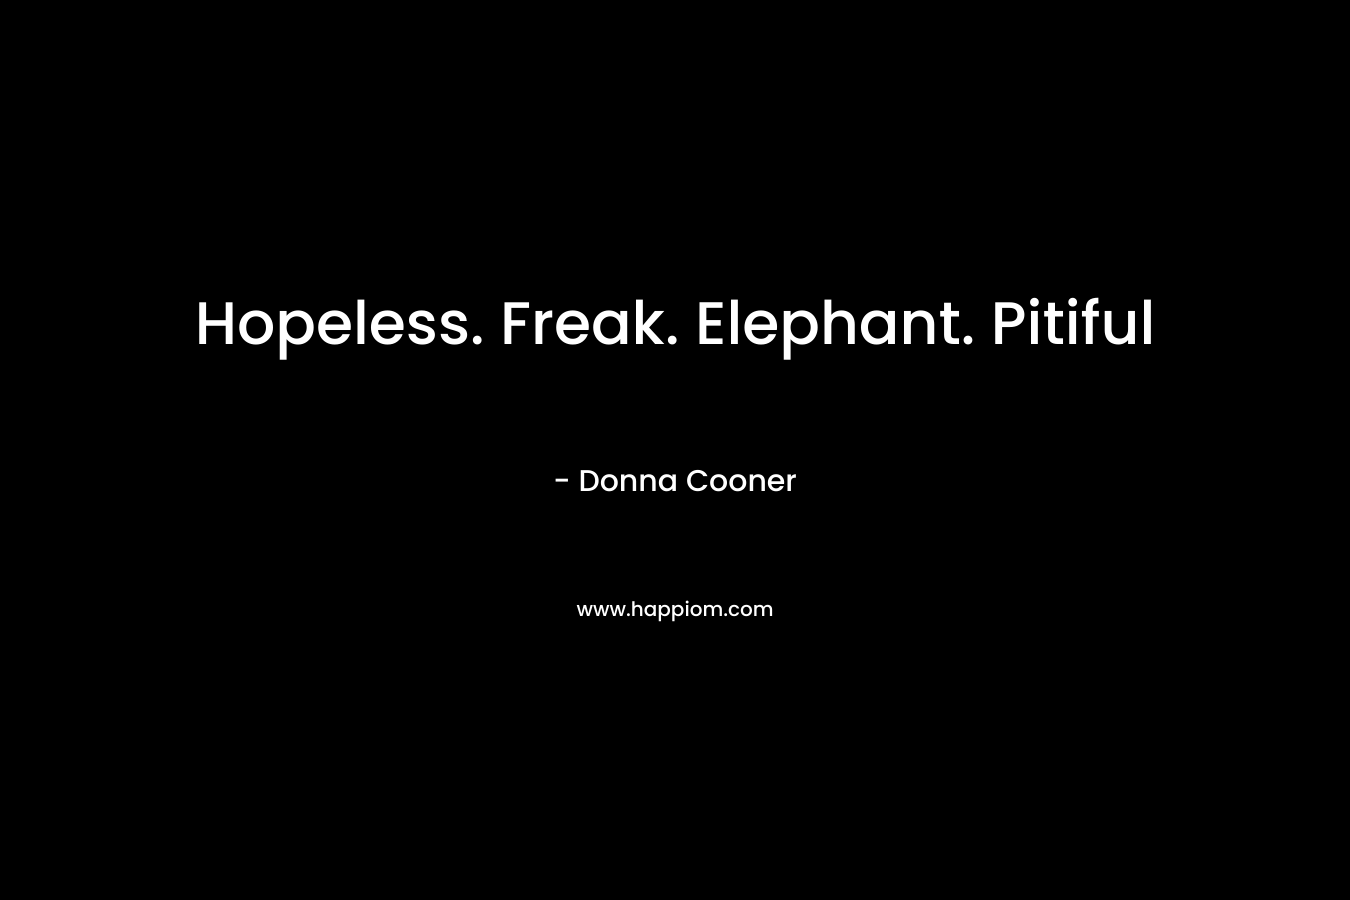 Hopeless. Freak. Elephant. Pitiful